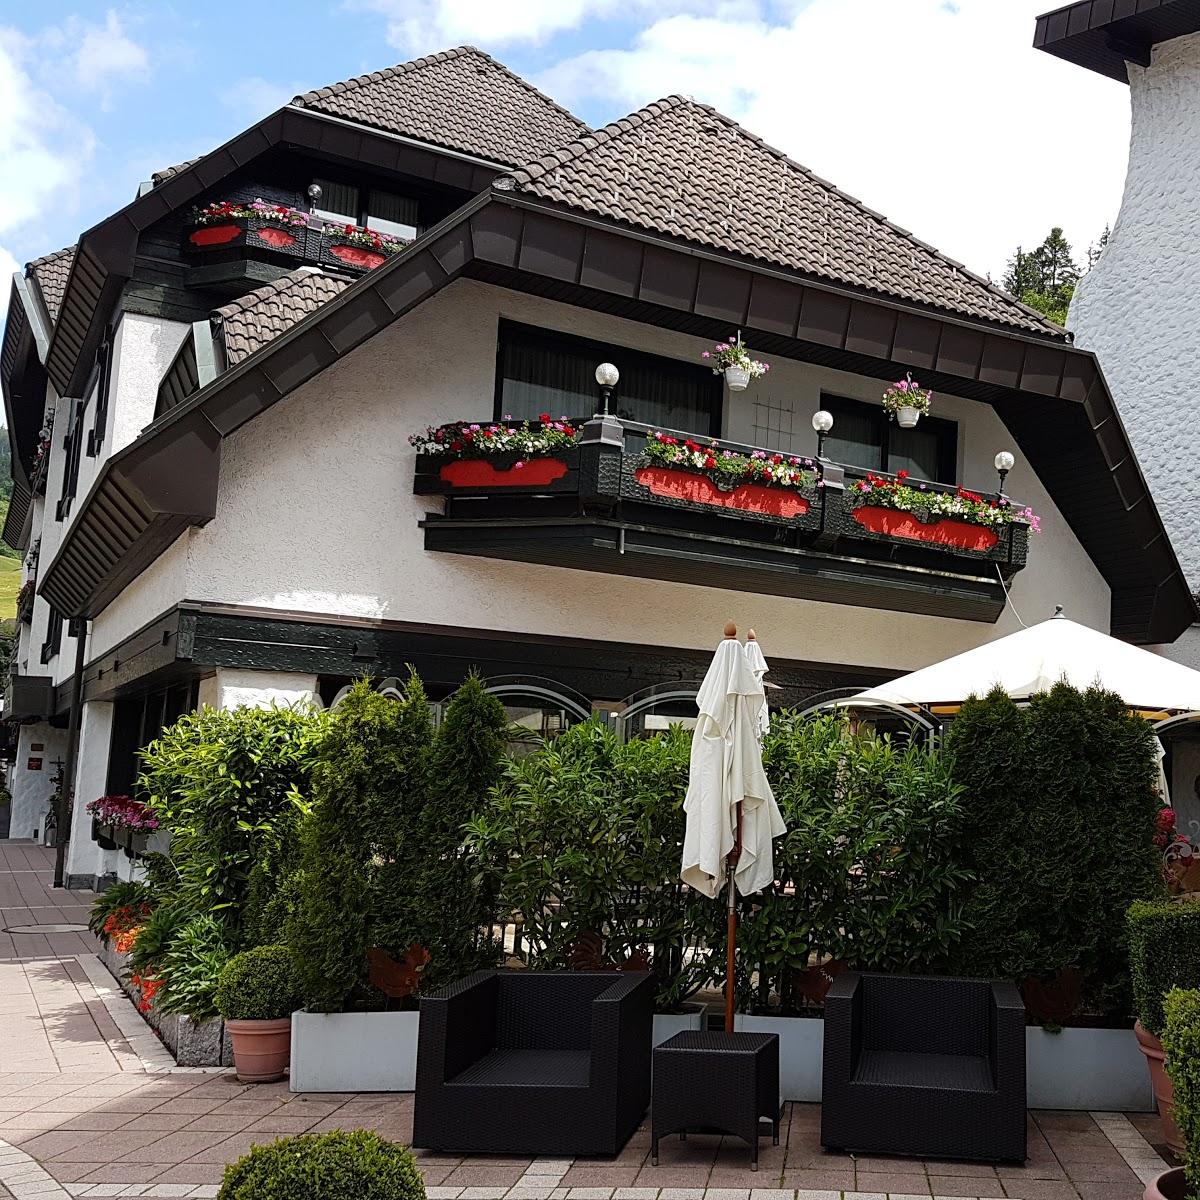 Restaurant "Restaurant Schlossberg" in Baiersbronn